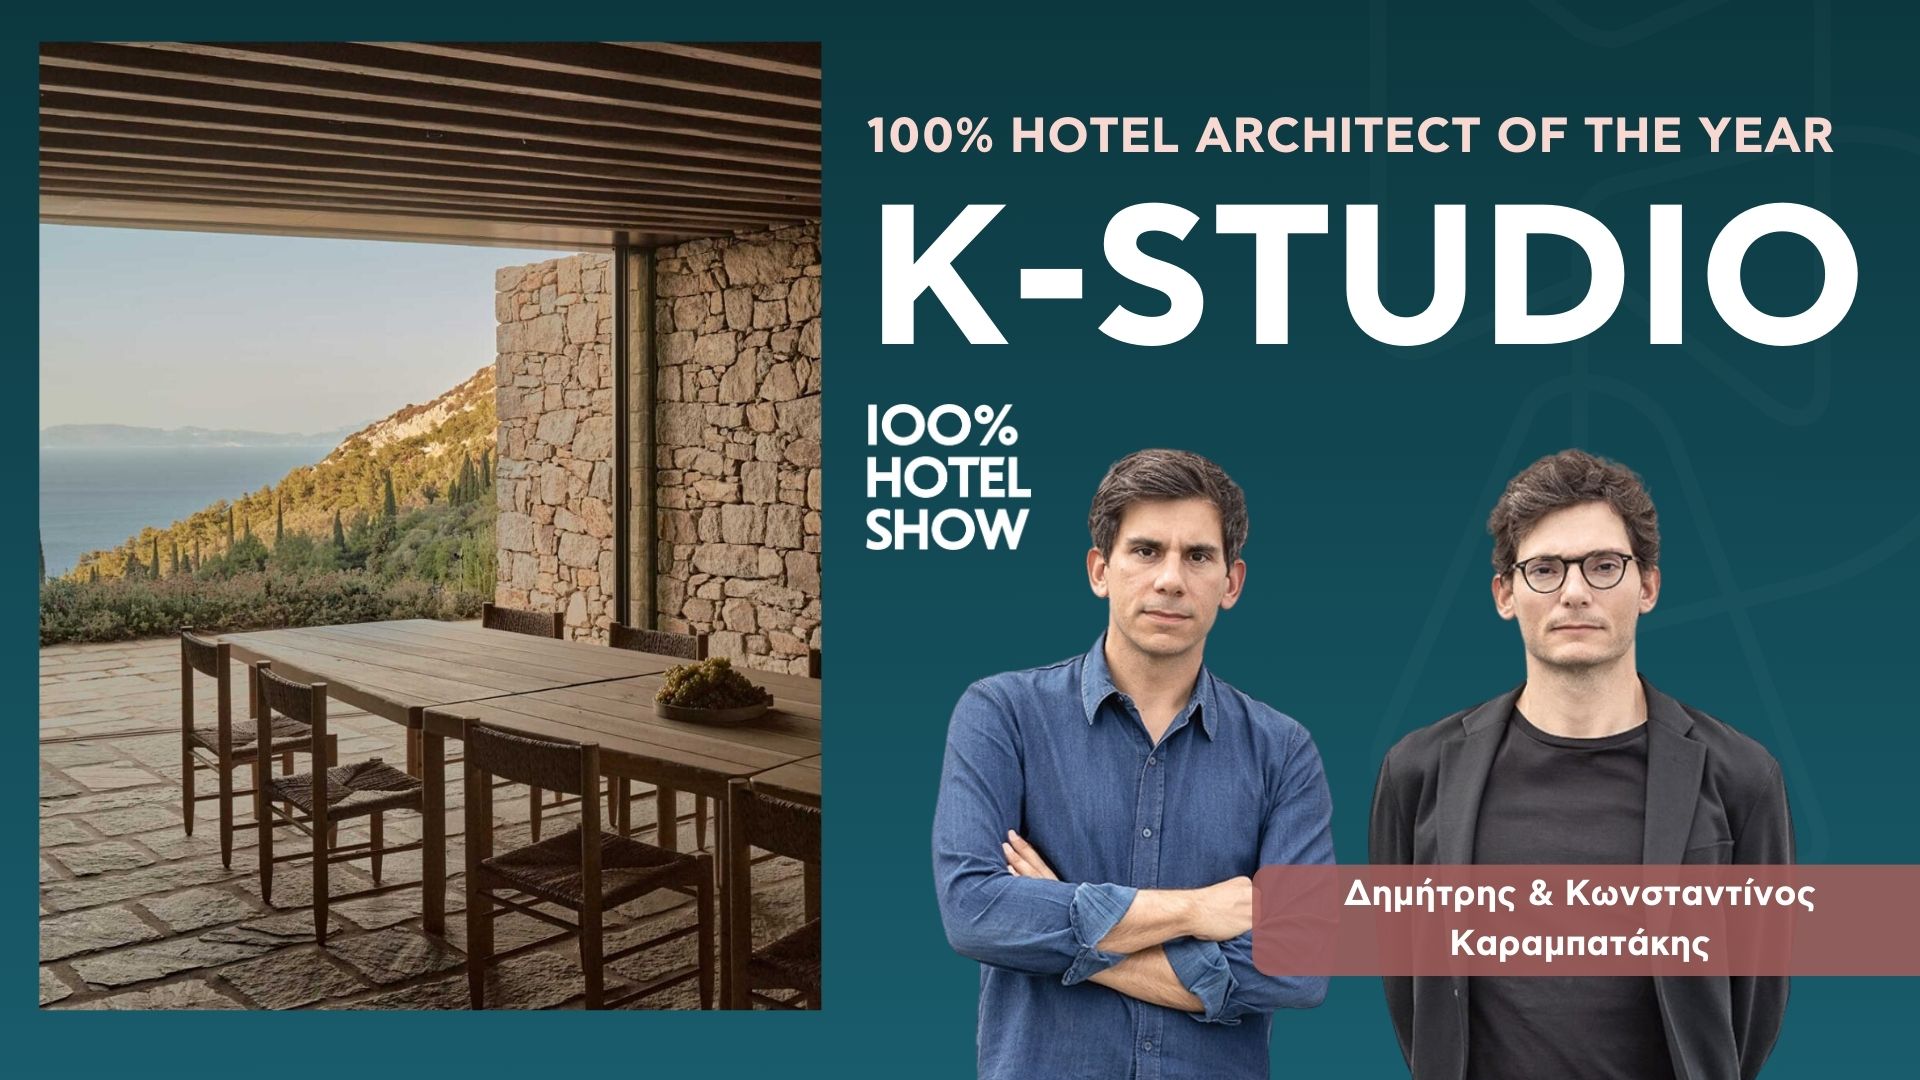 "100% Hotel Architect of the Year: Το K-Studio Ξεχωρίζει στον Κόσμο τού Ξενοδοχειακού Design"